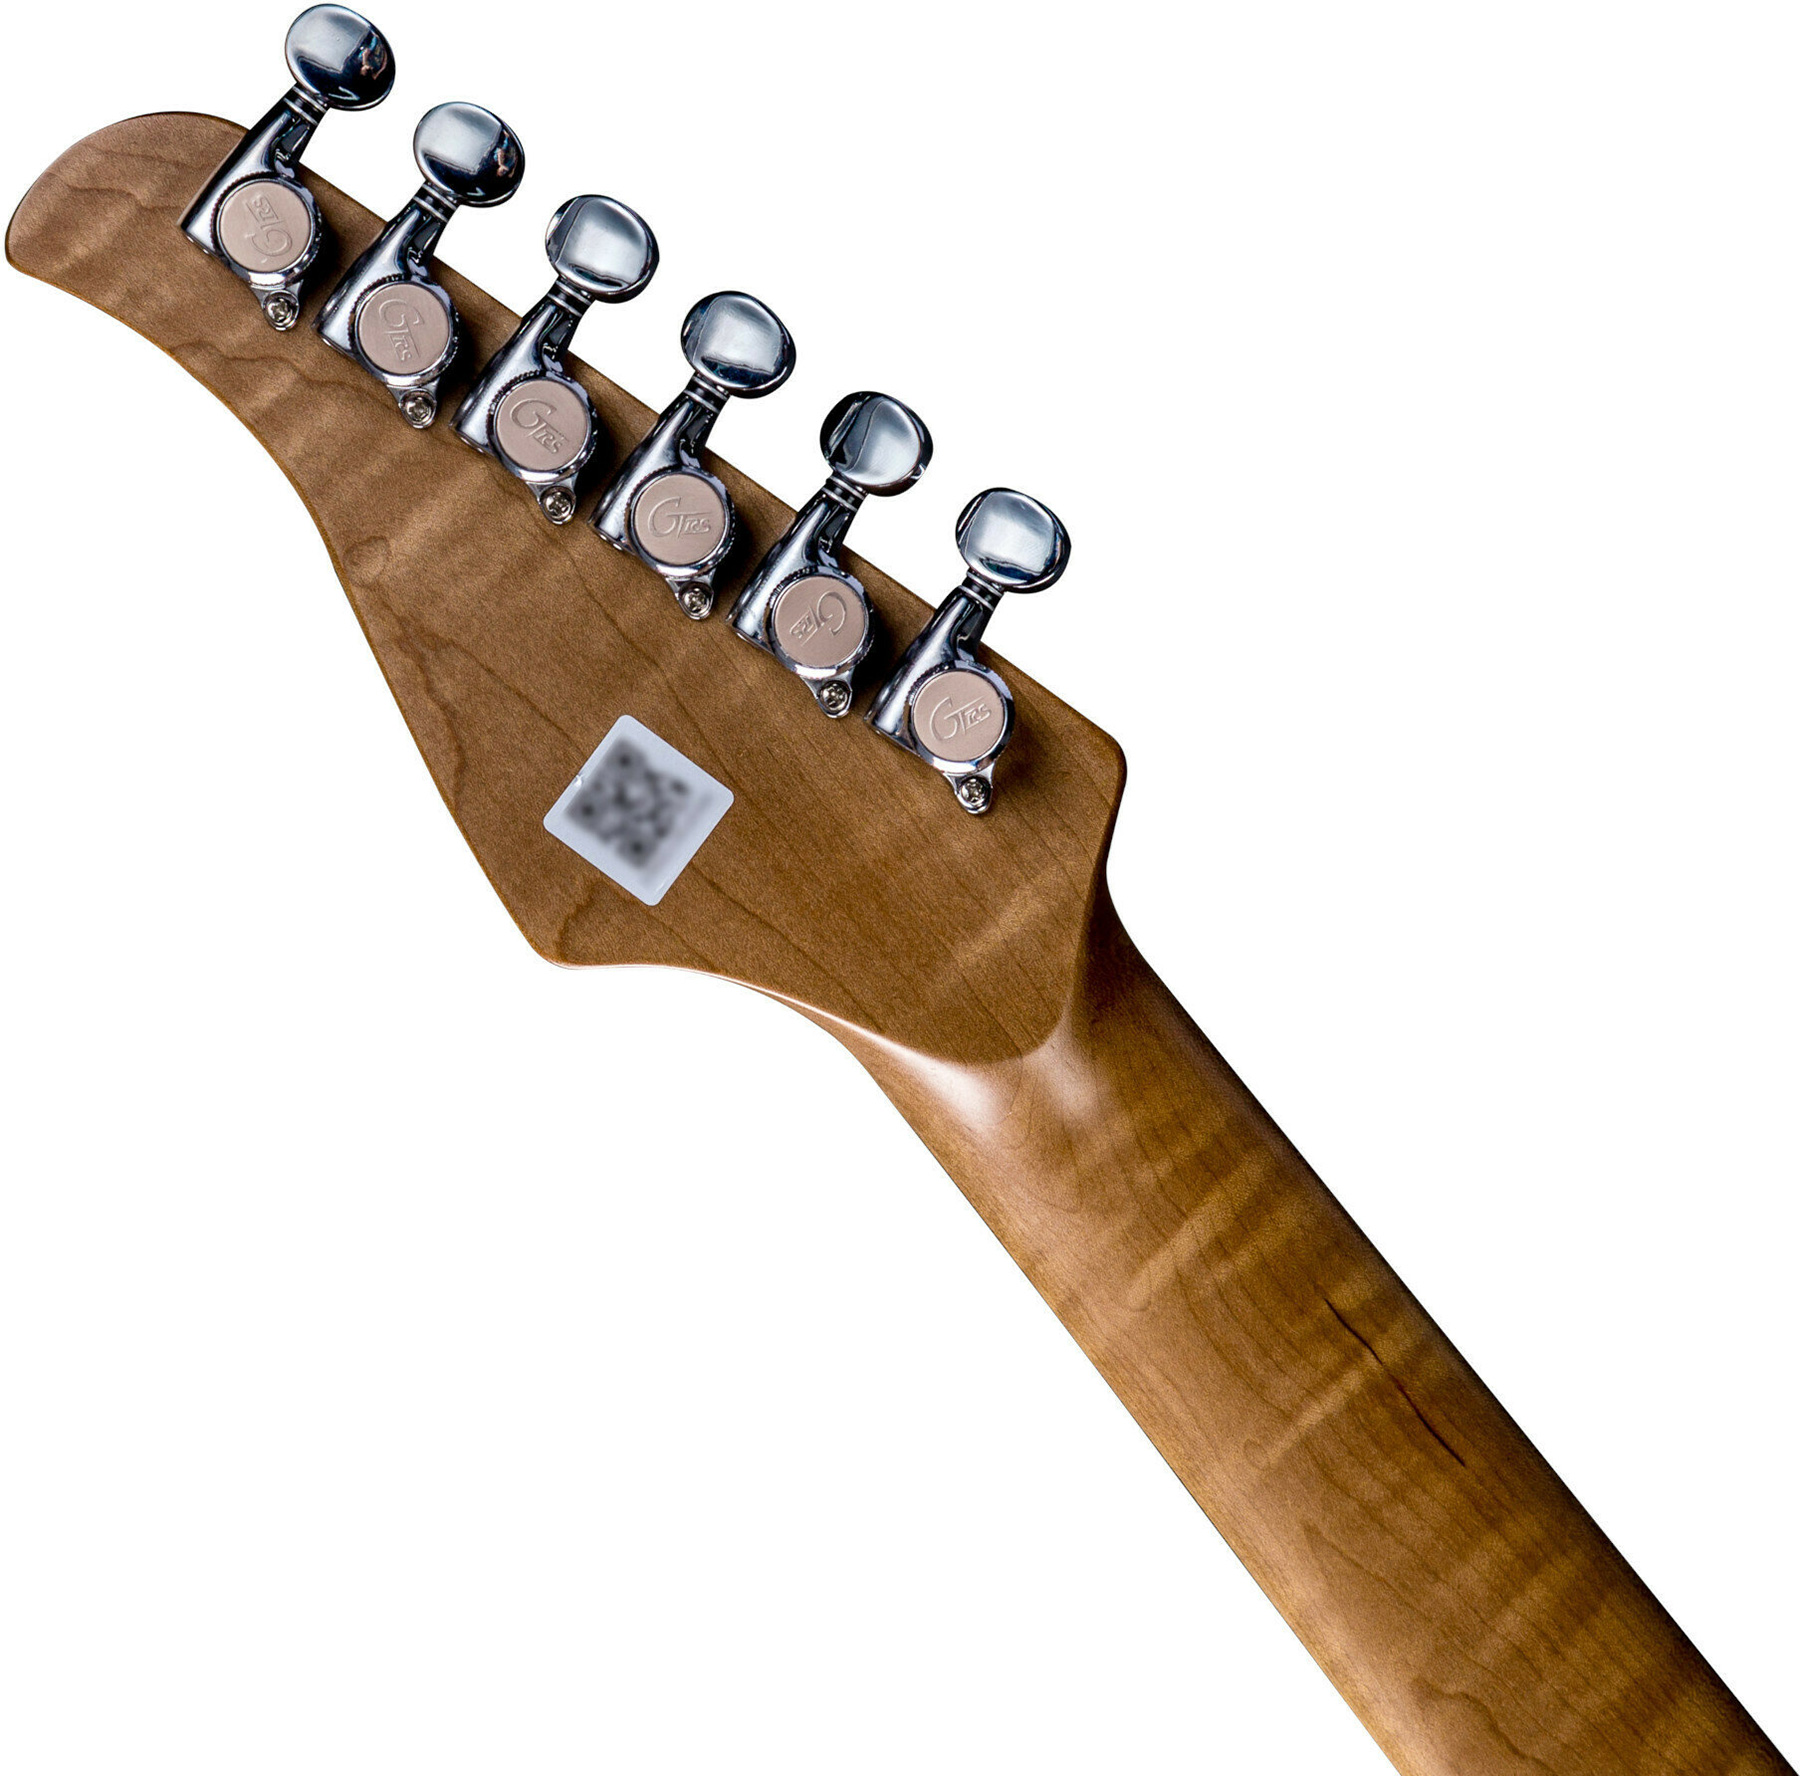 Mooer Gtrs P800 Pro Intelligent Guitar Hss Trem Rw - Tiffany Blue - Modeling guitar - Variation 4